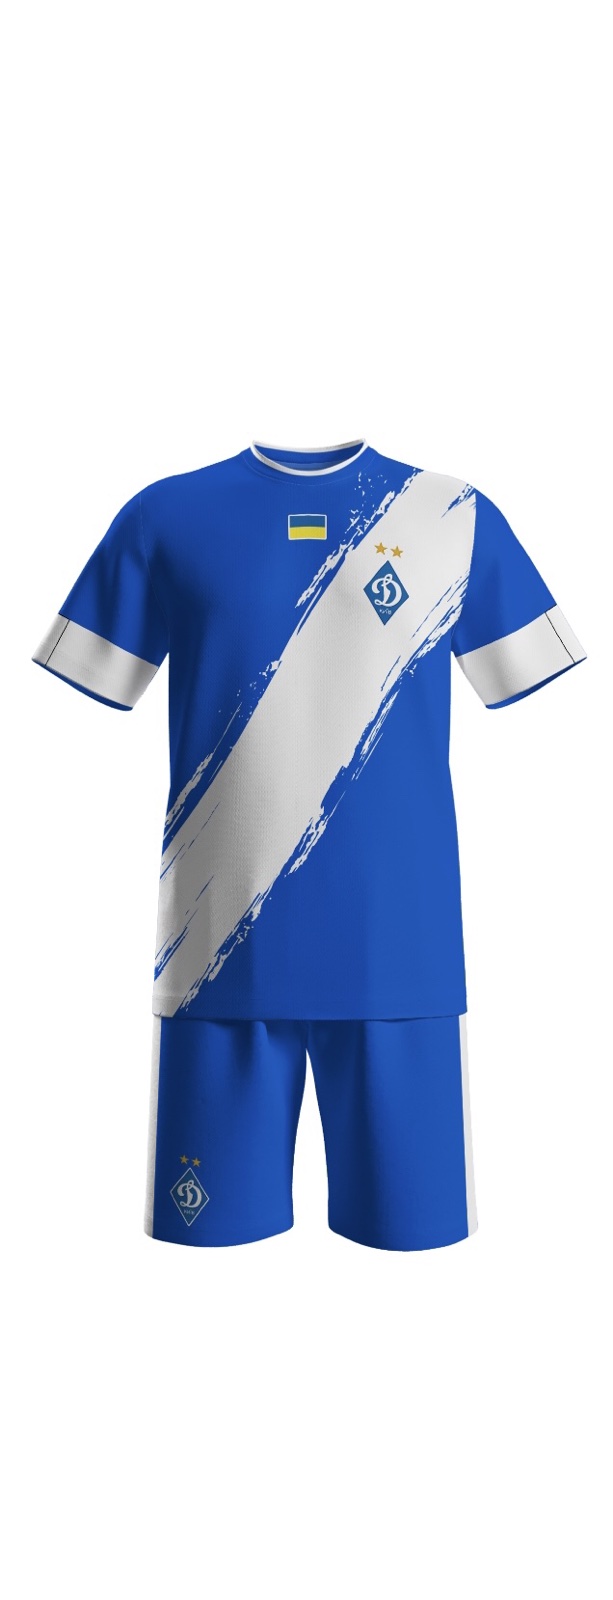 Dynamo Kyiv blue uniform